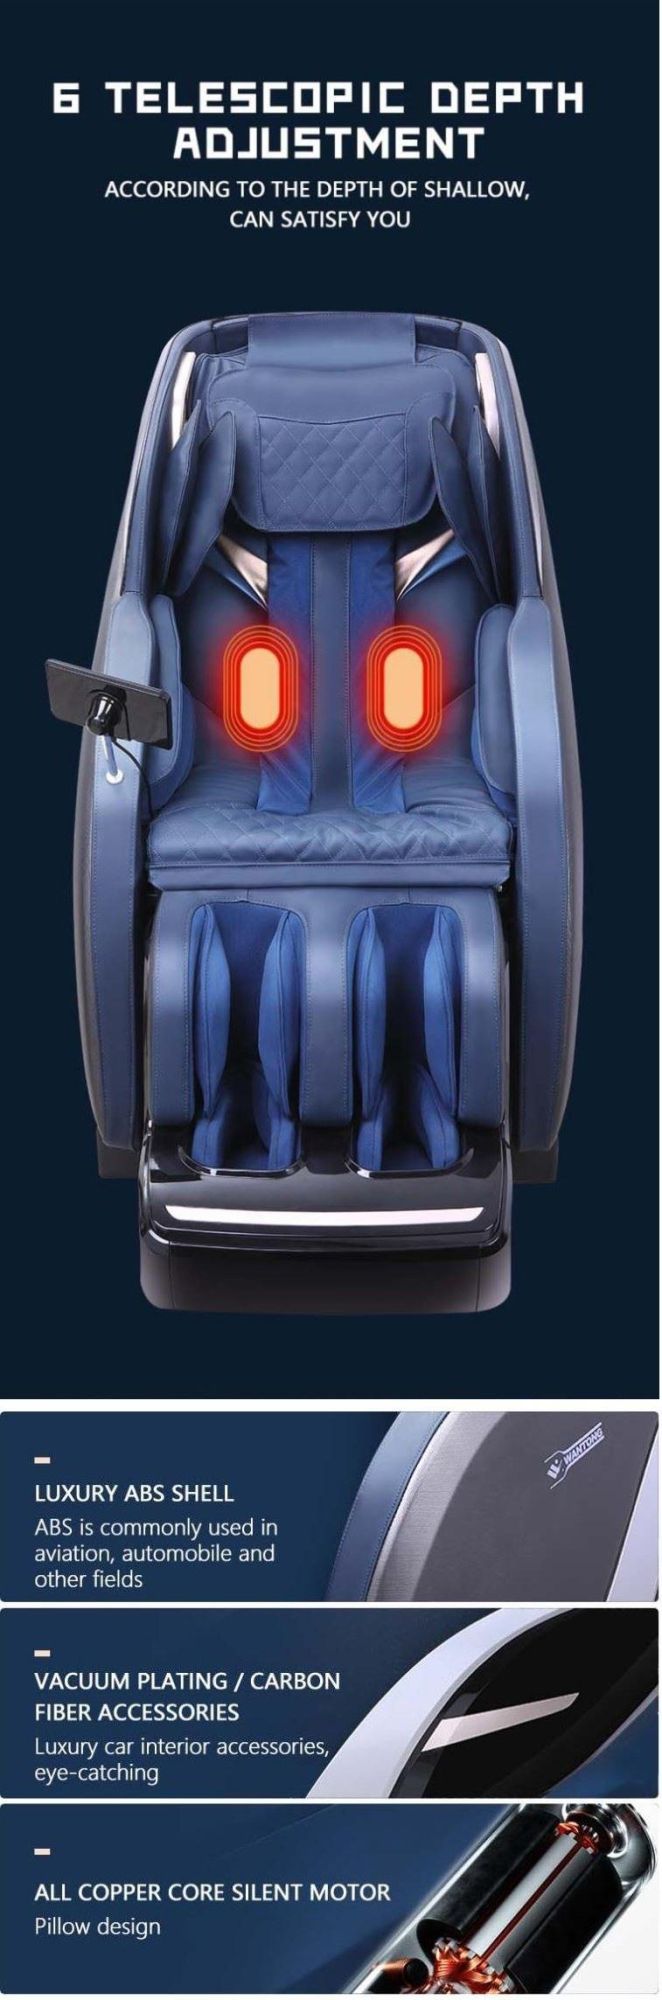 Best Price Electric Zero Gravity Recliner Deluxe Multi-Functional Massage Chair